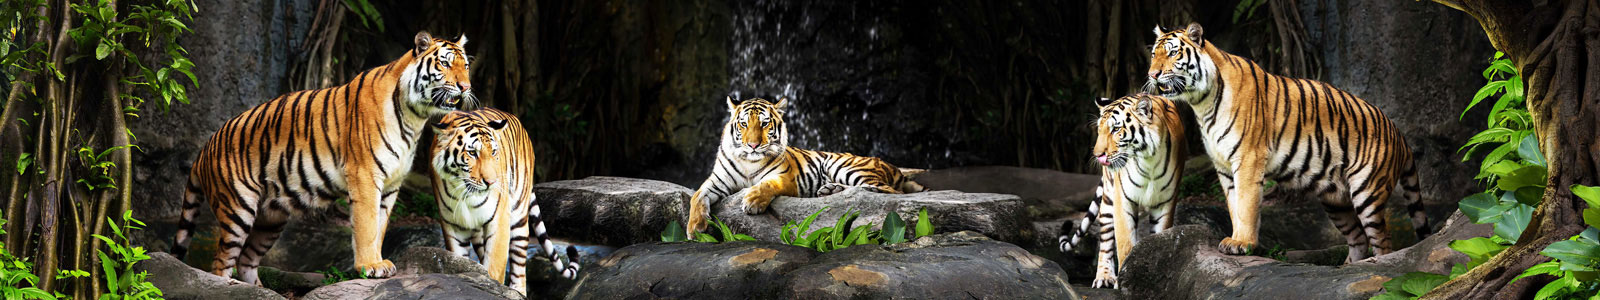 №6147 - Тигры на отдыхе